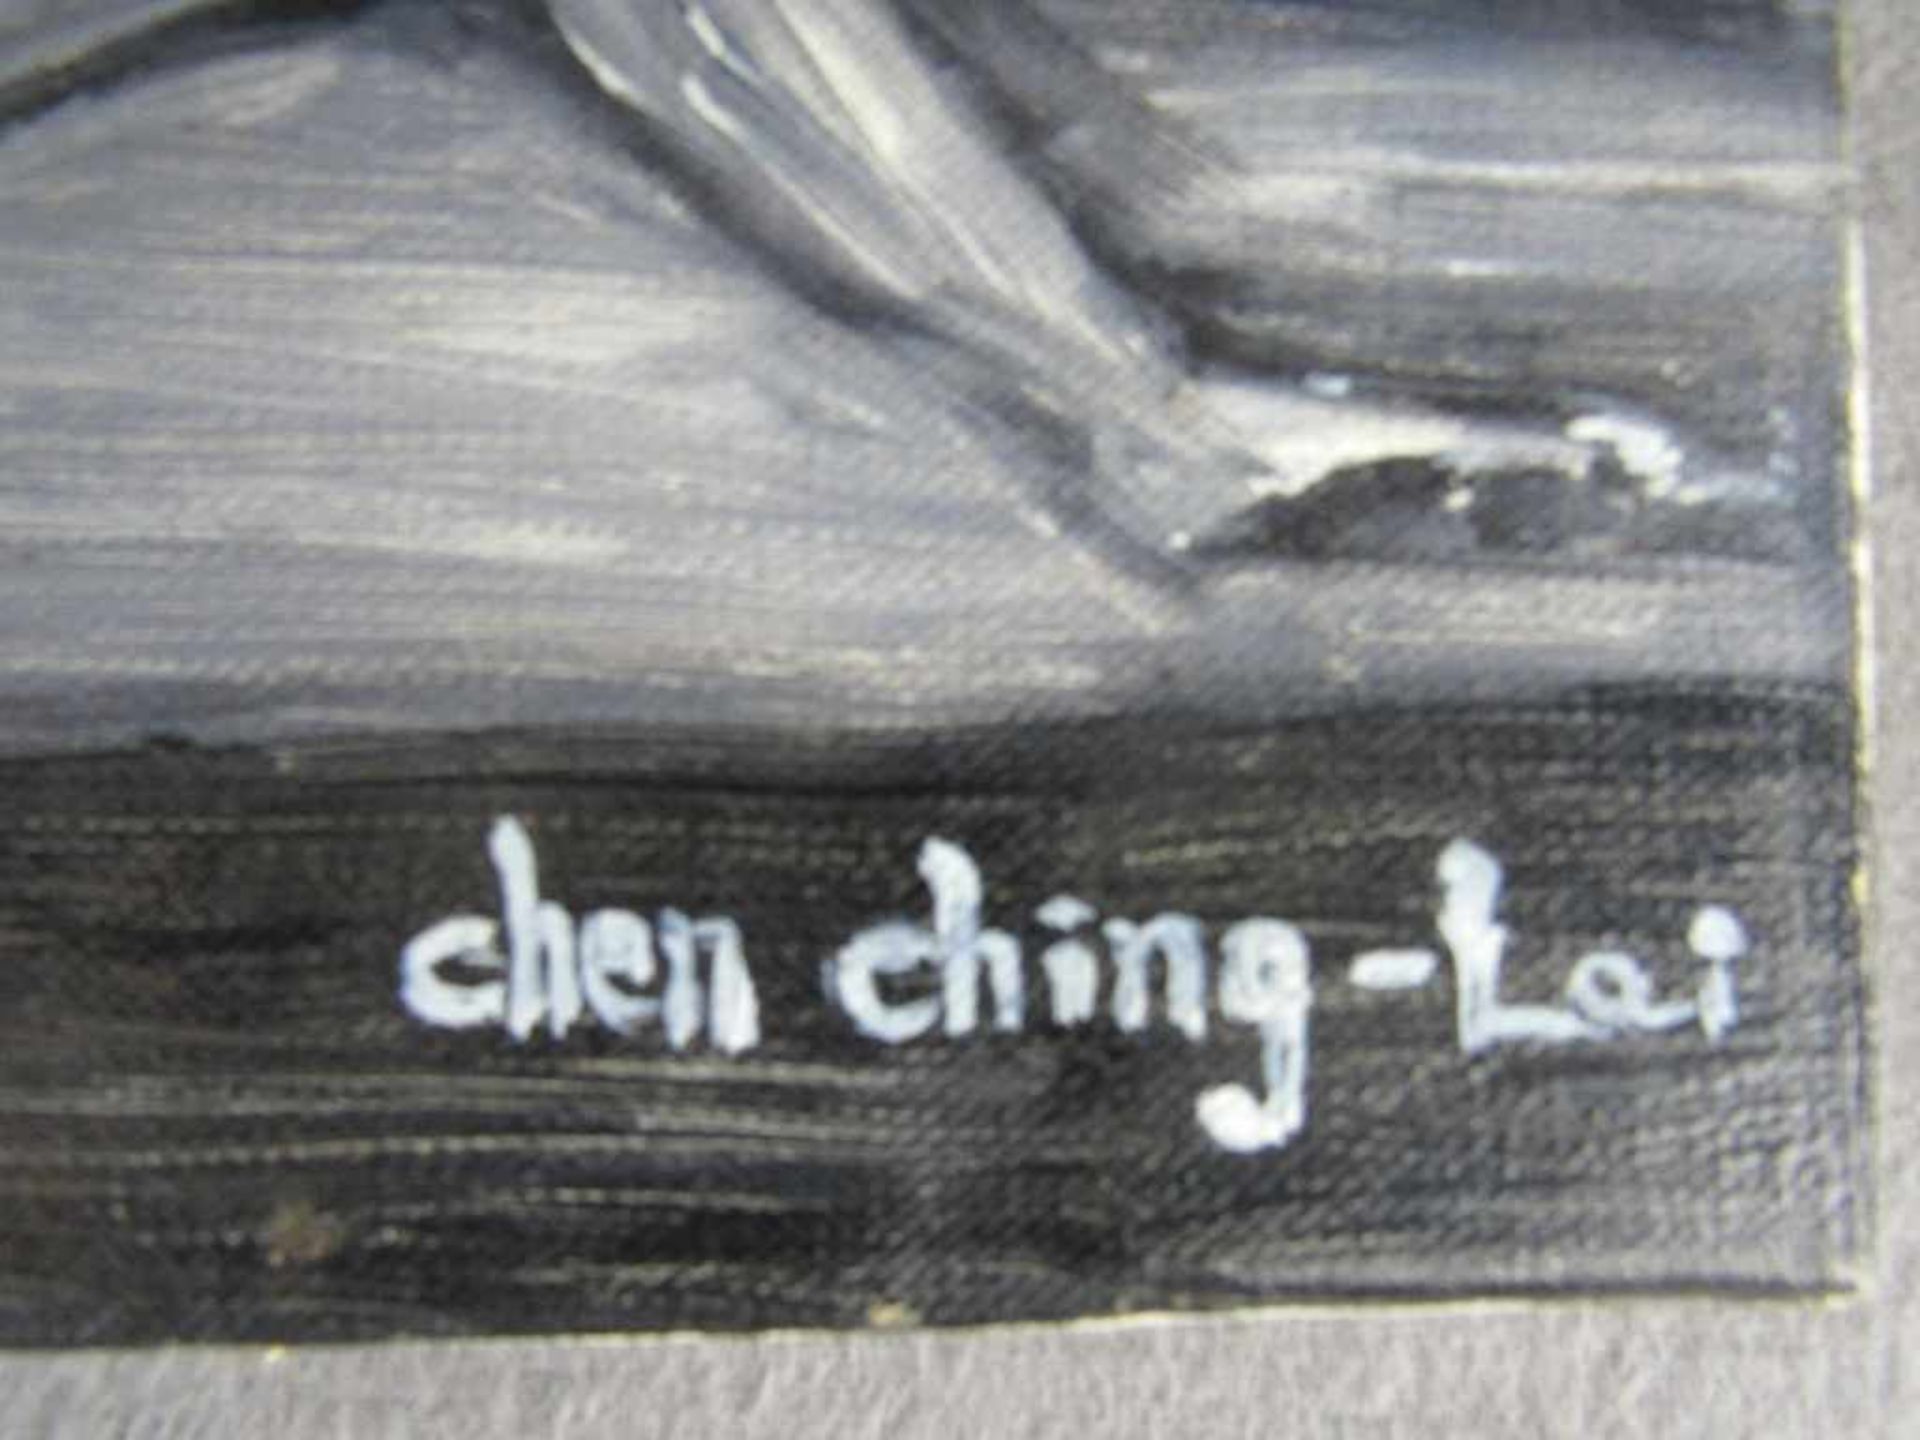 Ölgemälde Öl auf Leinwand Aktszenerie signiert Chen Ching-Lai 35x45cm- - -20.00 % buyer's premium on - Image 2 of 3